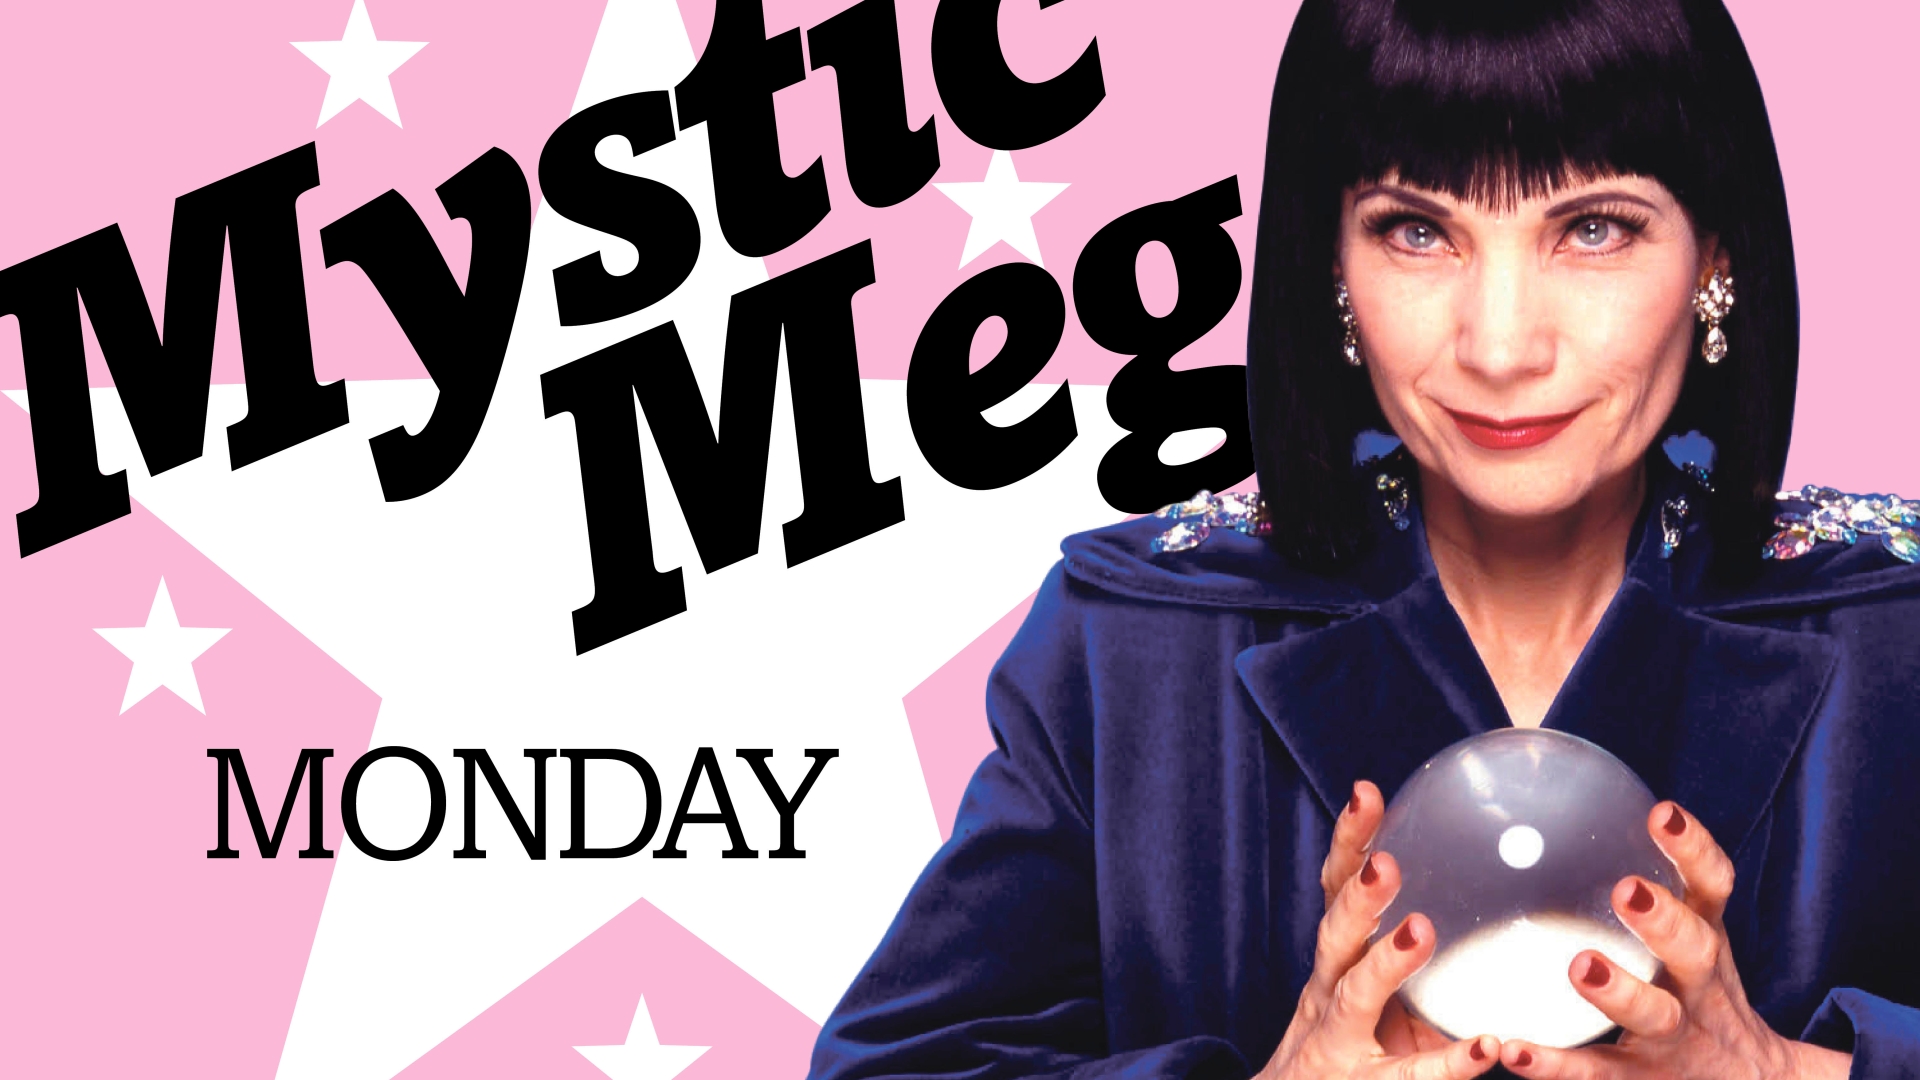 Today’s Horoscope: Daily star sign guide for Mystic Meg, November 14